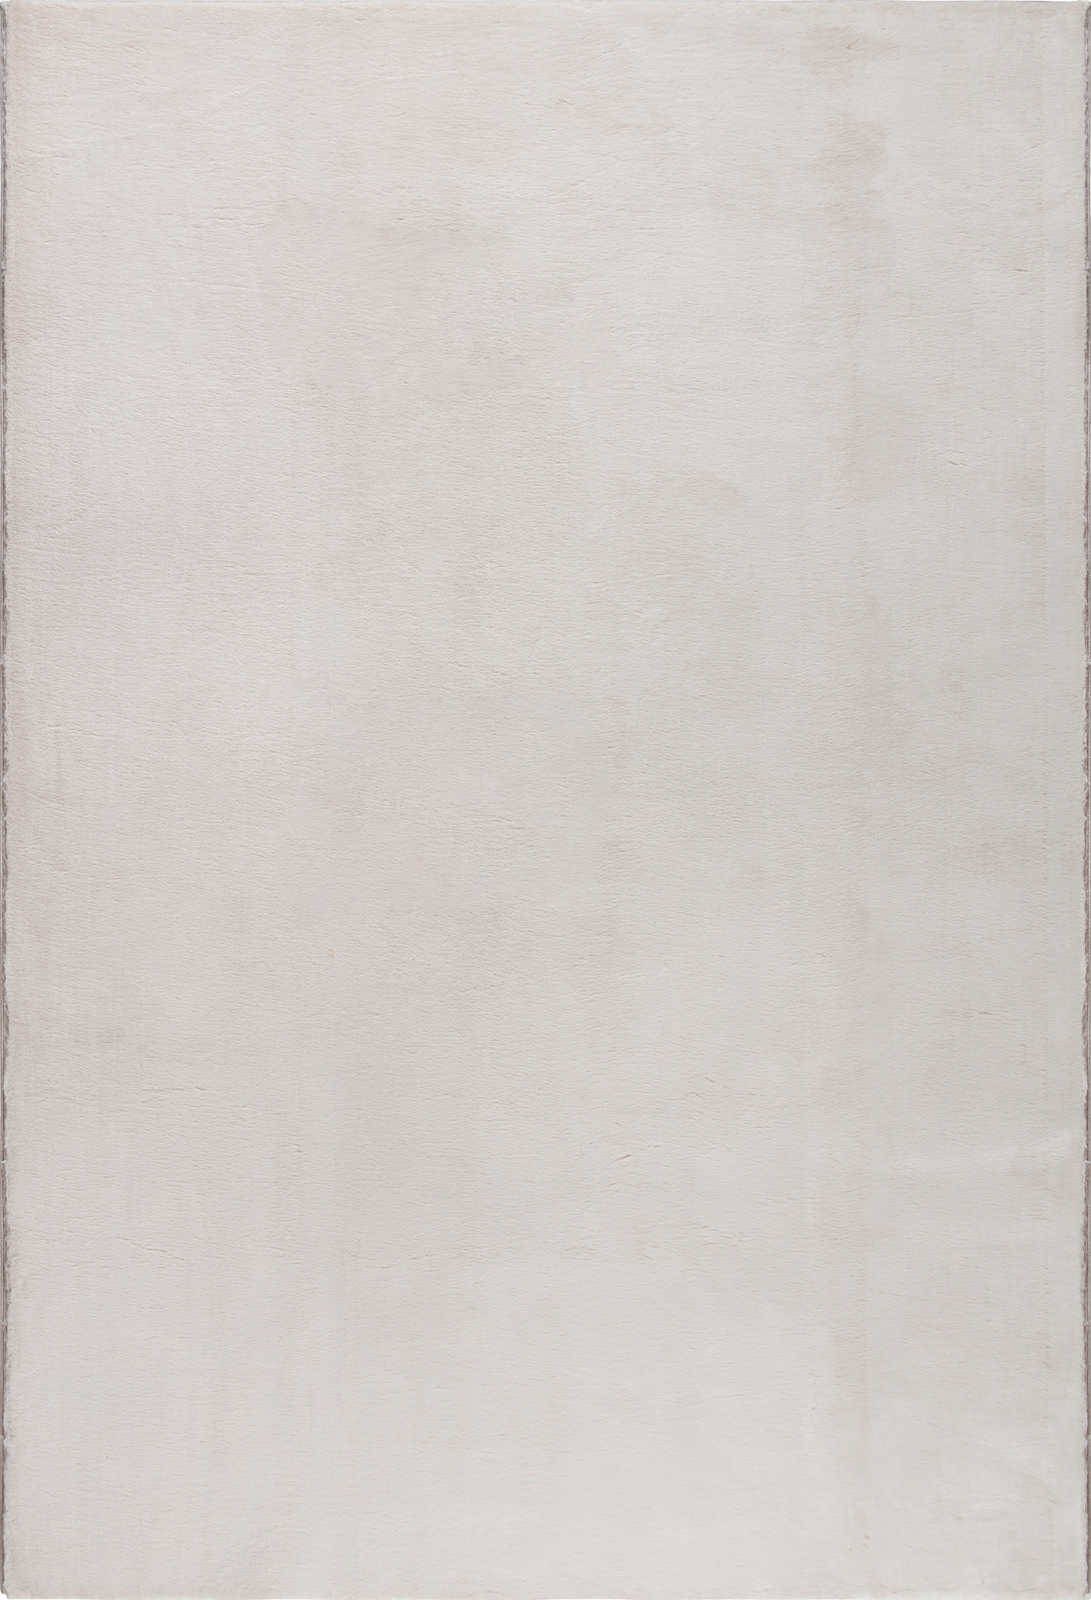             Knuffelzacht hoogpolig tapijt in lichtbeige - 150 x 80 cm
        